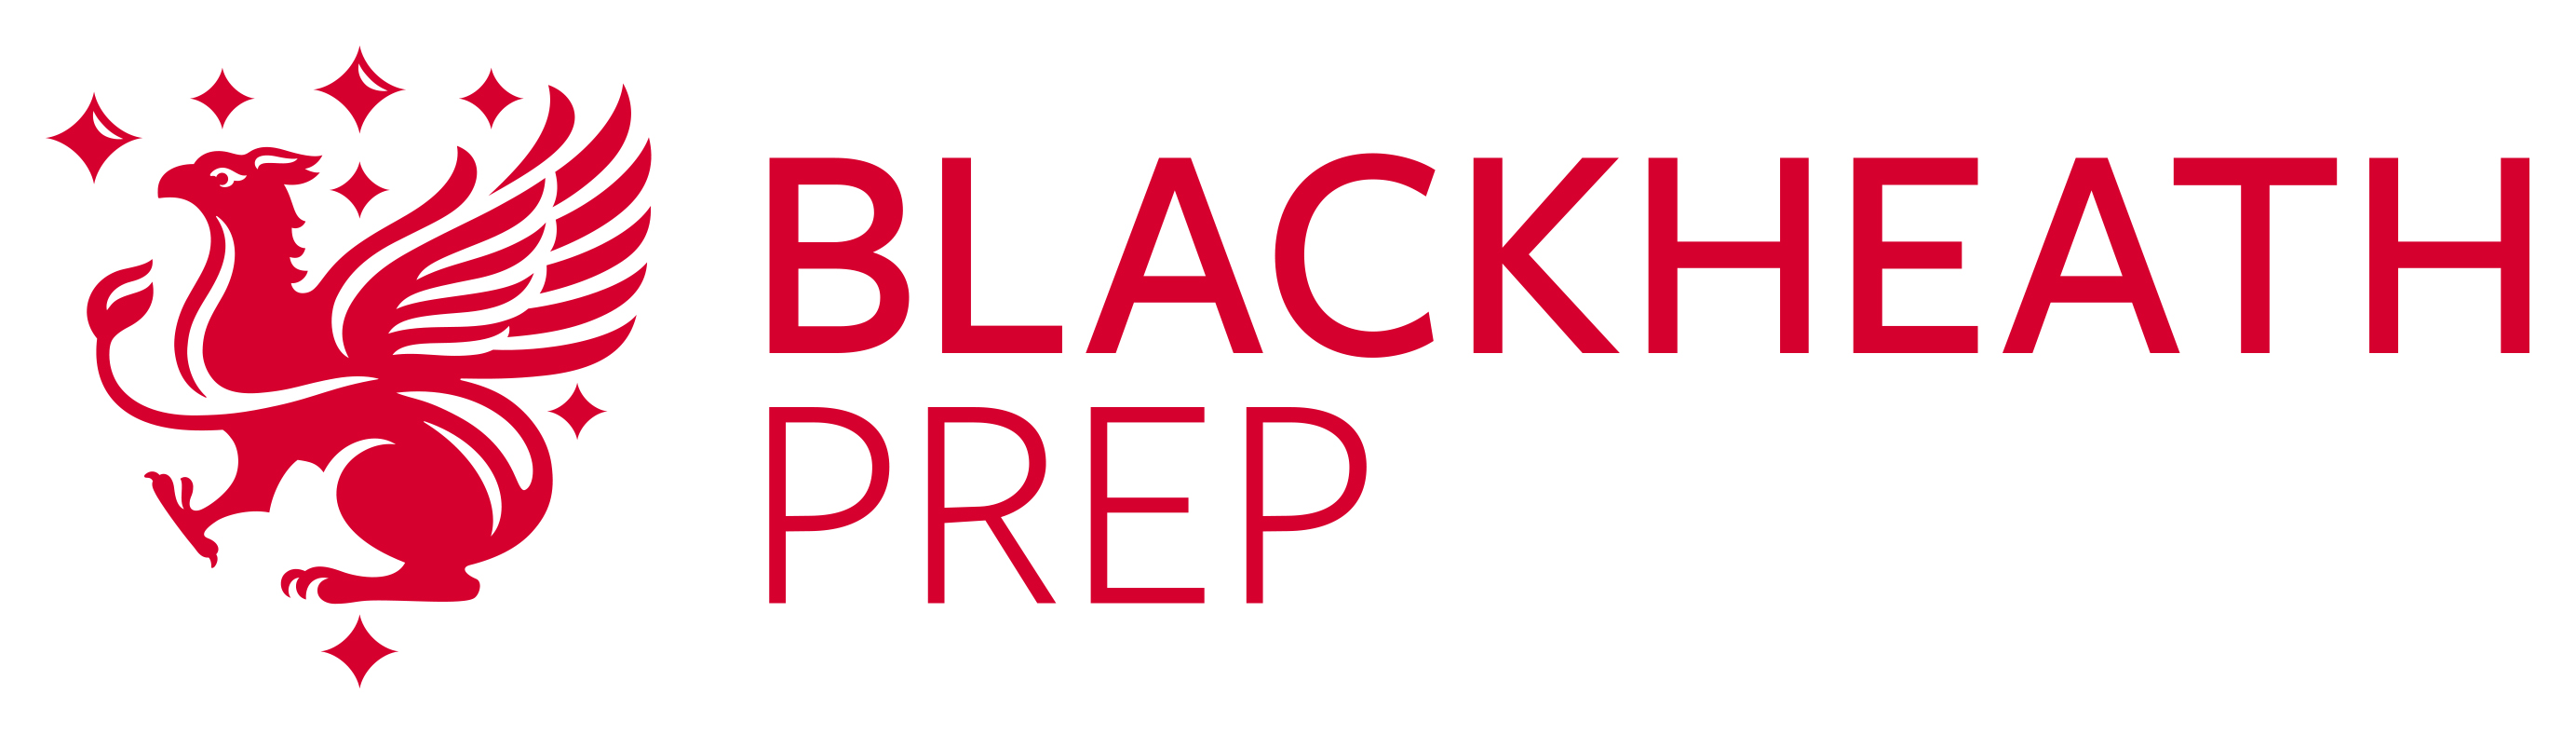 Blackheath Prep School